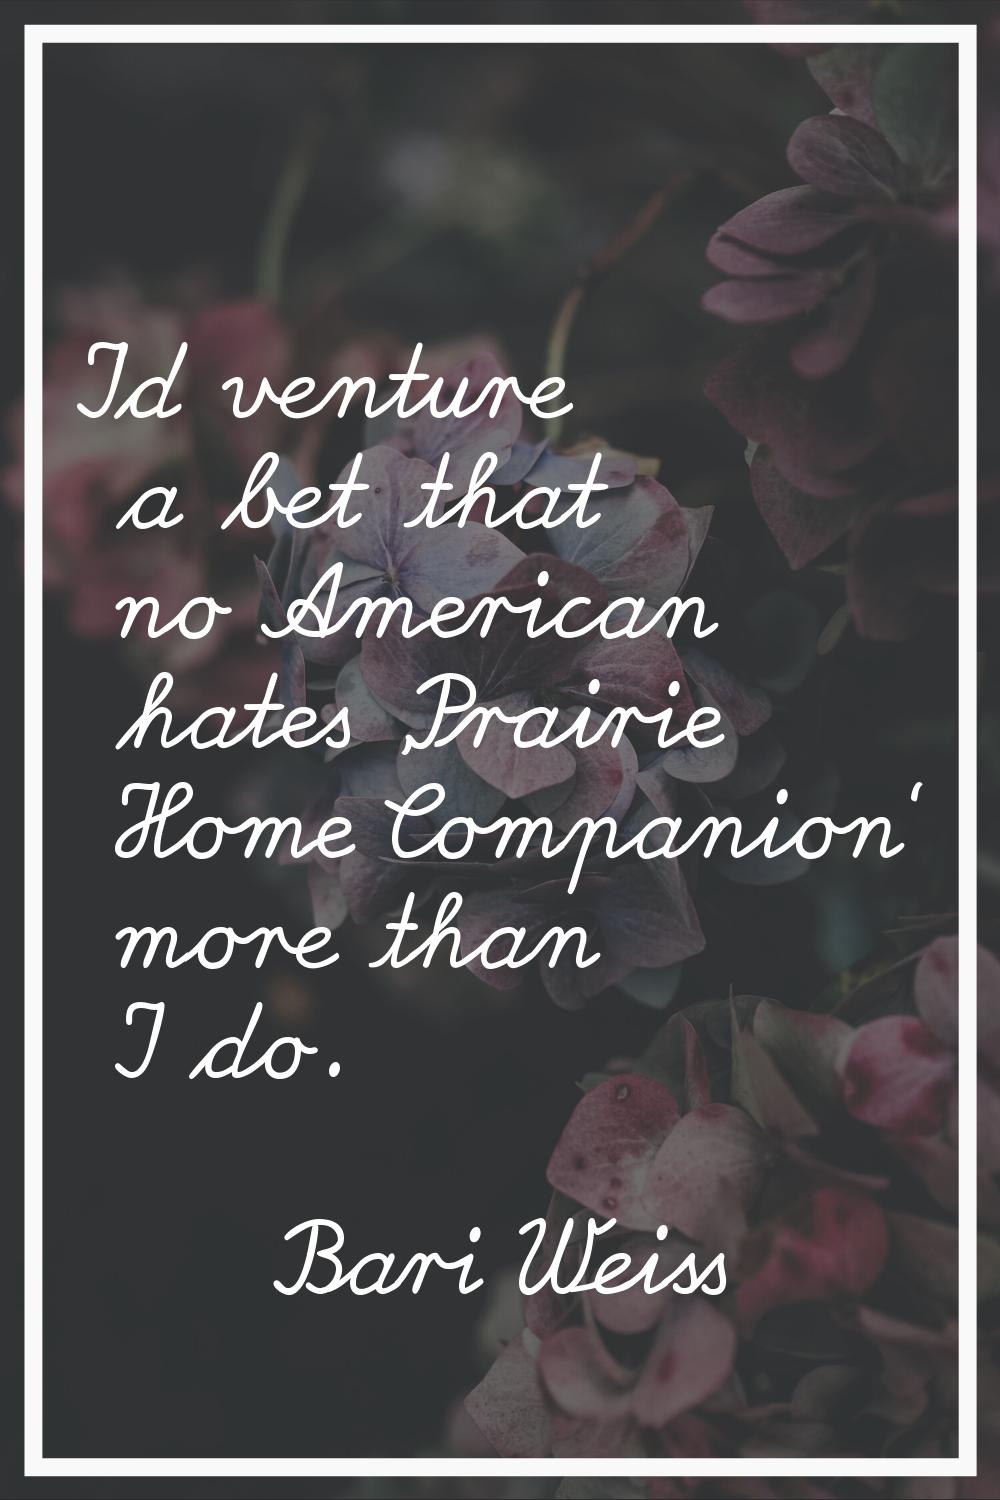 I'd venture a bet that no American hates 'Prairie Home Companion' more than I do.